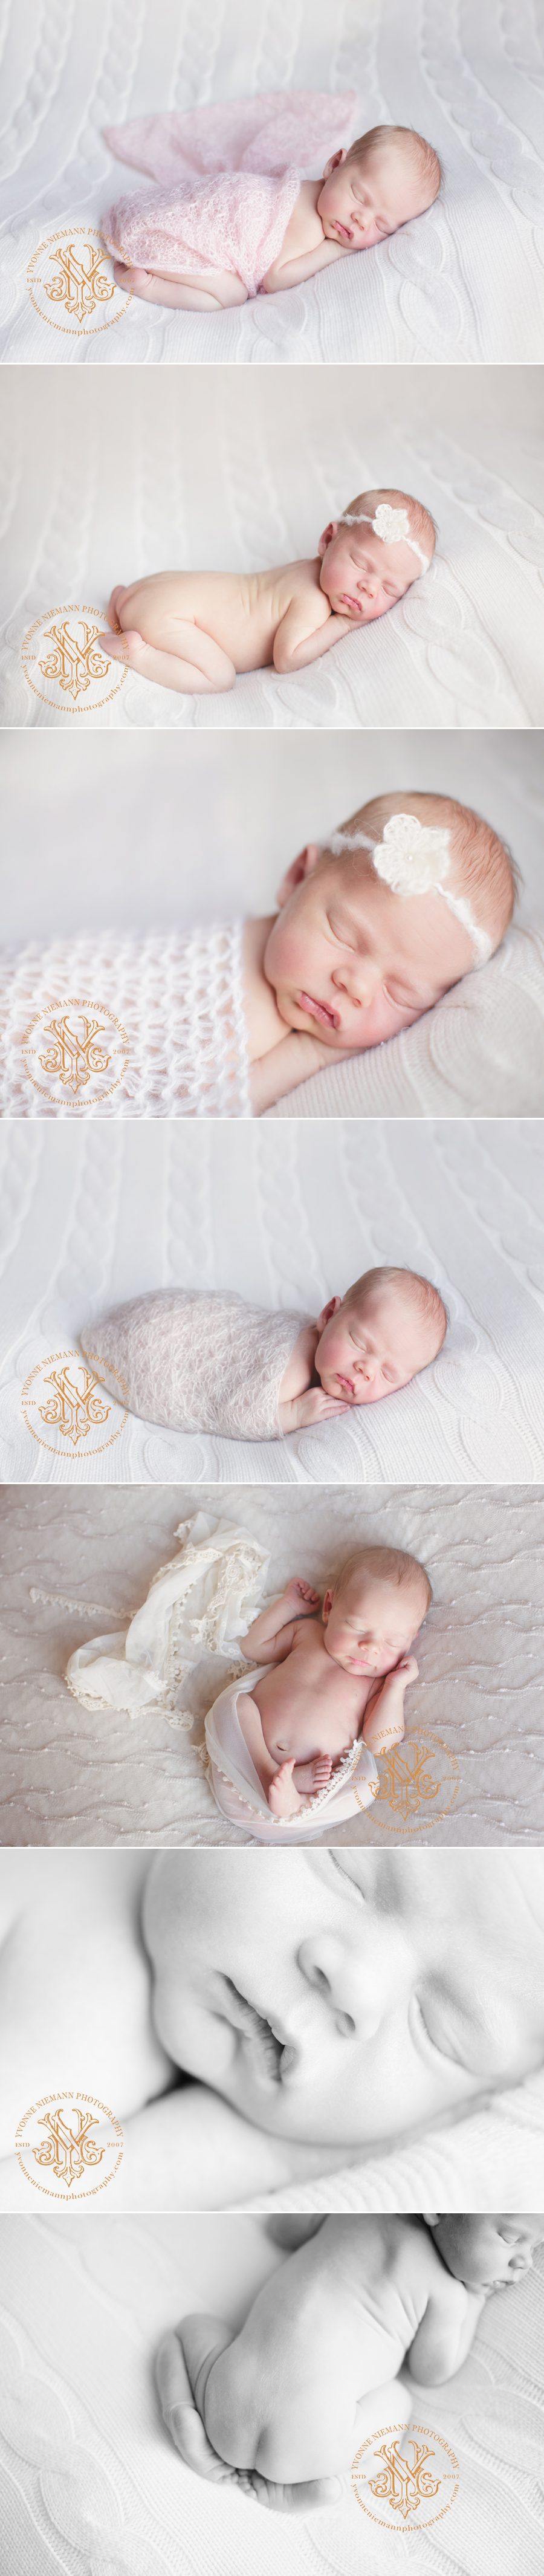 sleeping photos of infant girl taken by Athens, GA newborn photographer, Yvonne Niemann Photography.